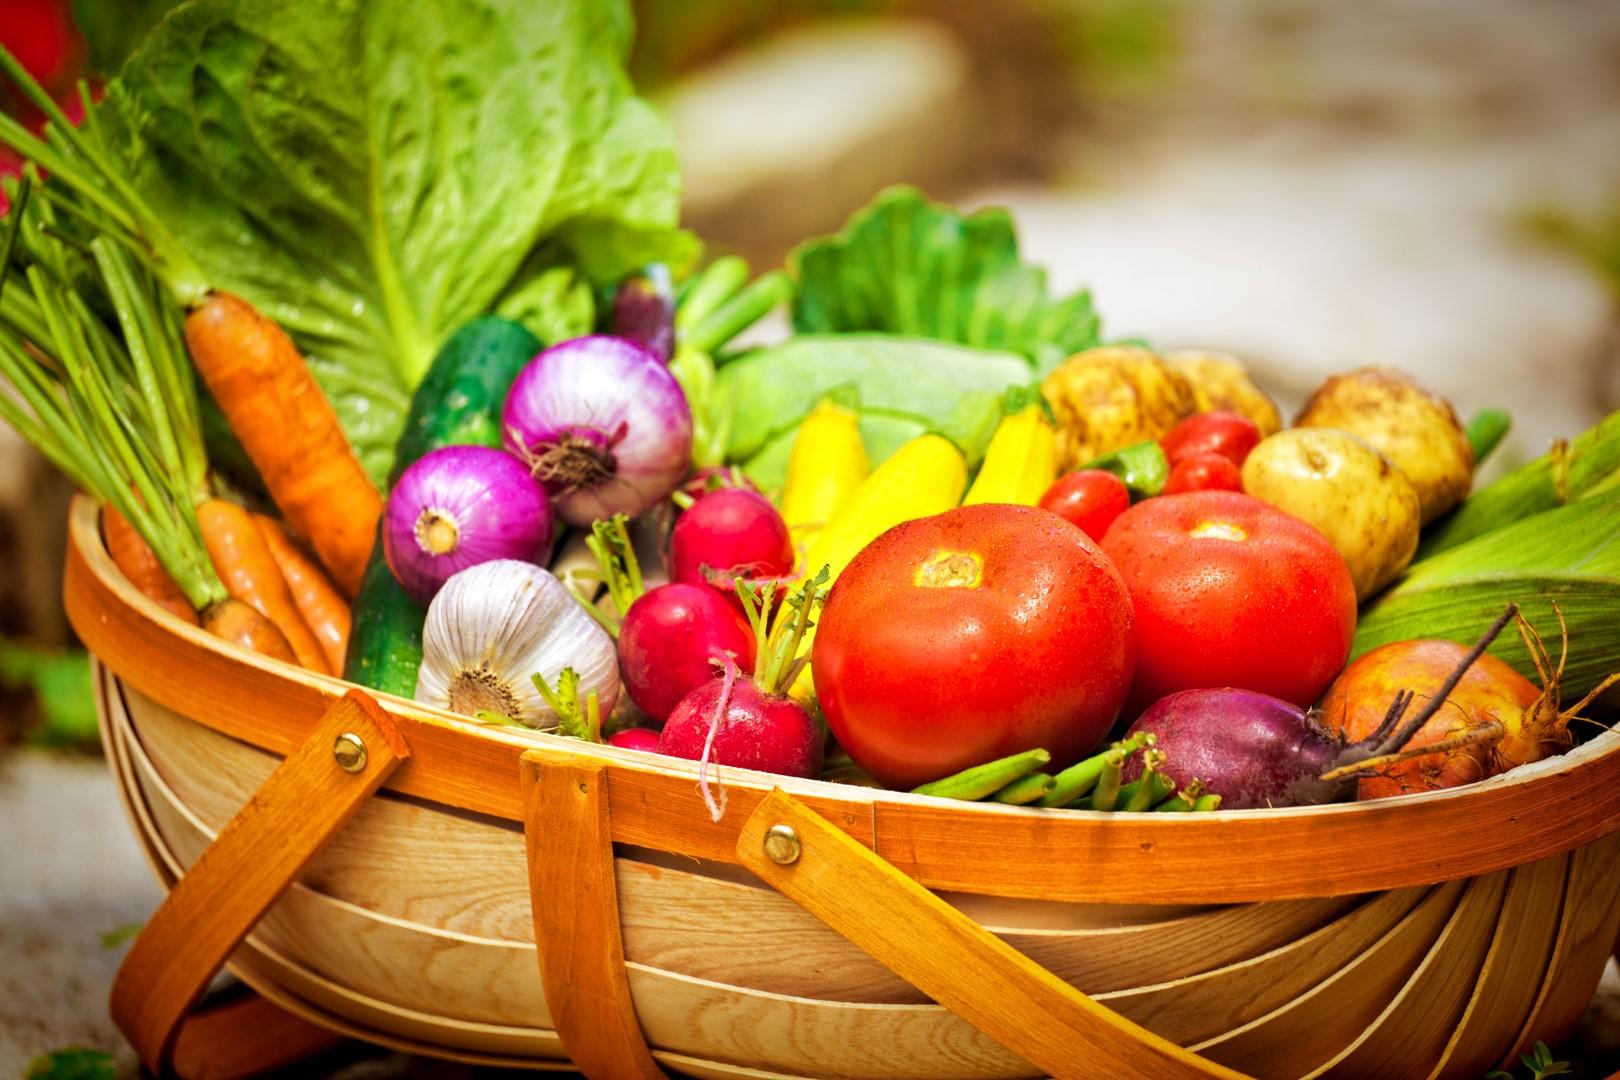 Fruits and Vegetables in Basket